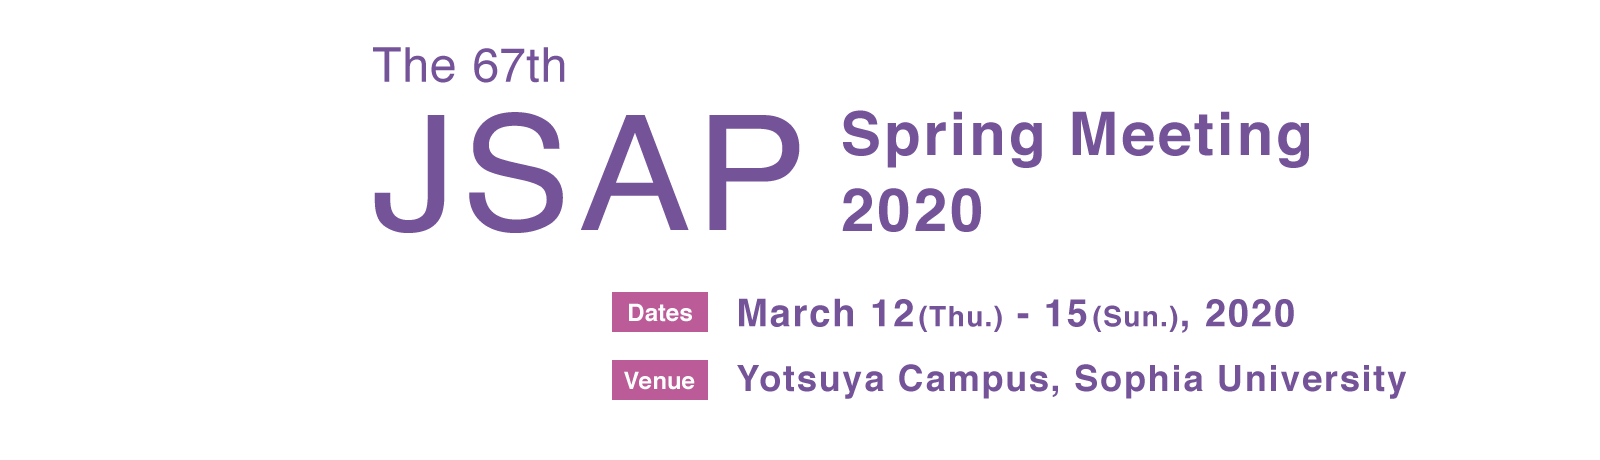 The 67th JSAP Spring Meeting, 2020 March 12(Thu.) – 15(San.), 2020 Yotsuya Campus, Sophia University